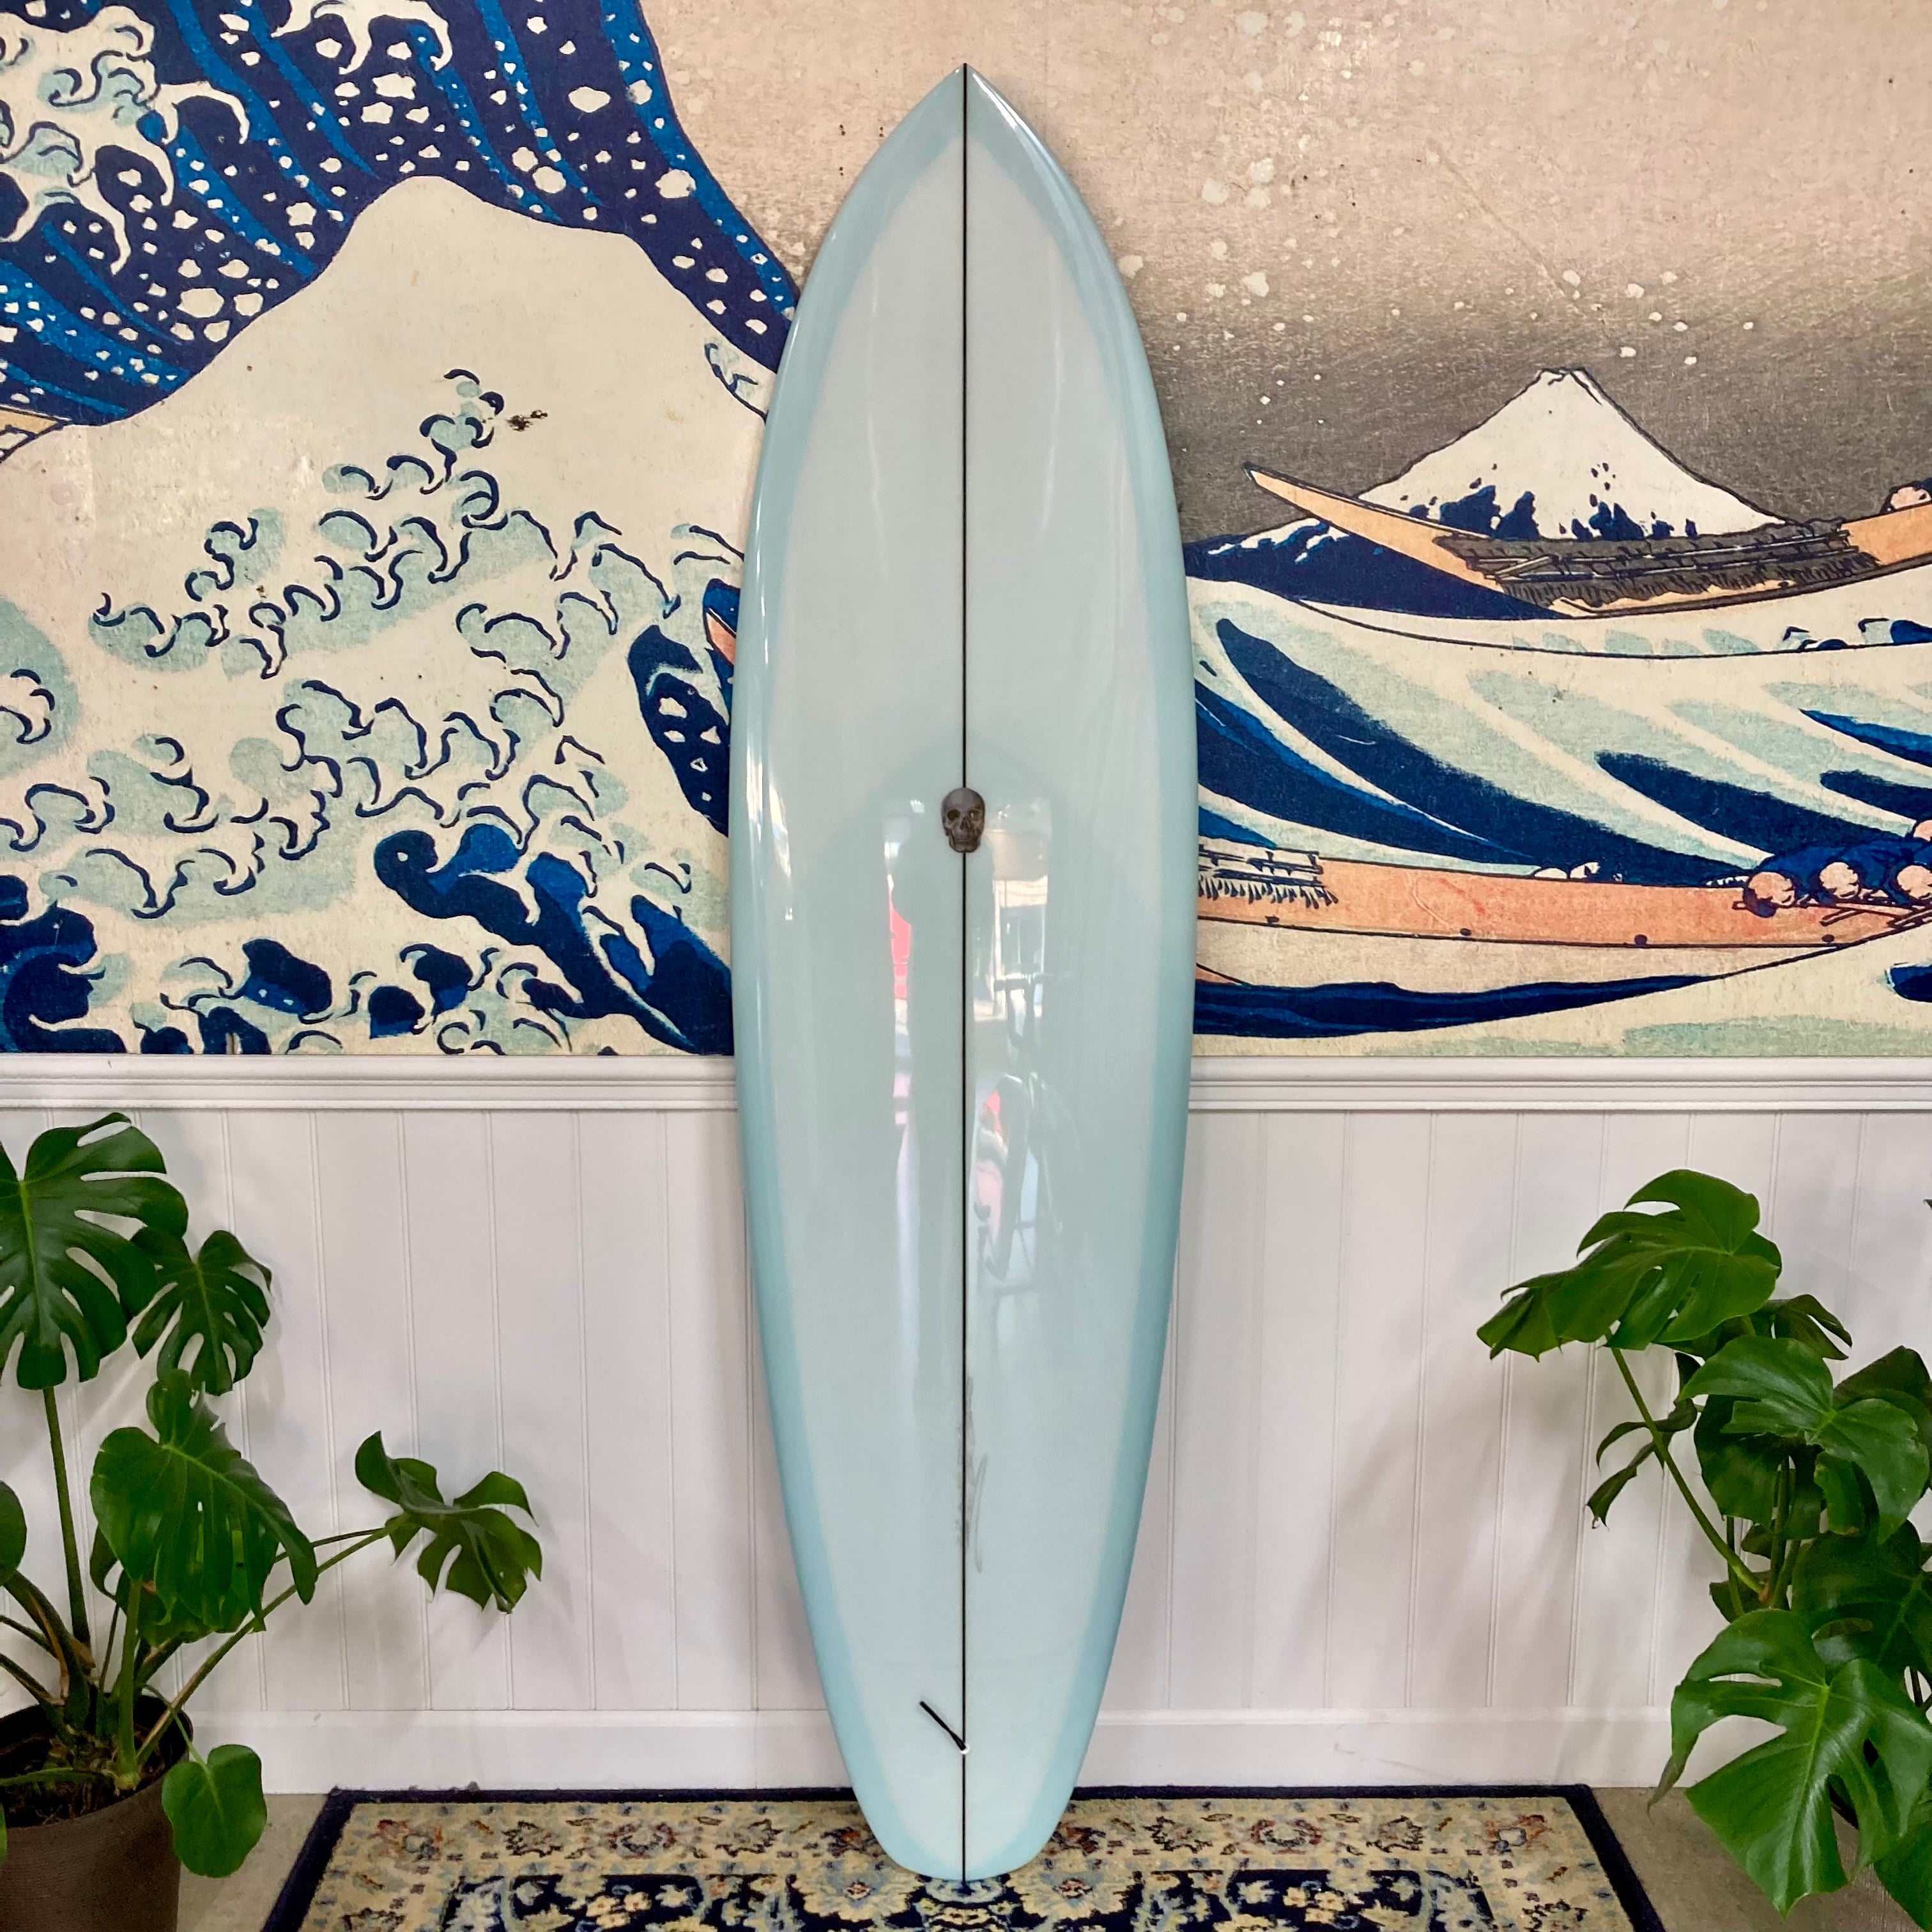 Christenson - 6'8 Ultra Tracker – Icons of Surf